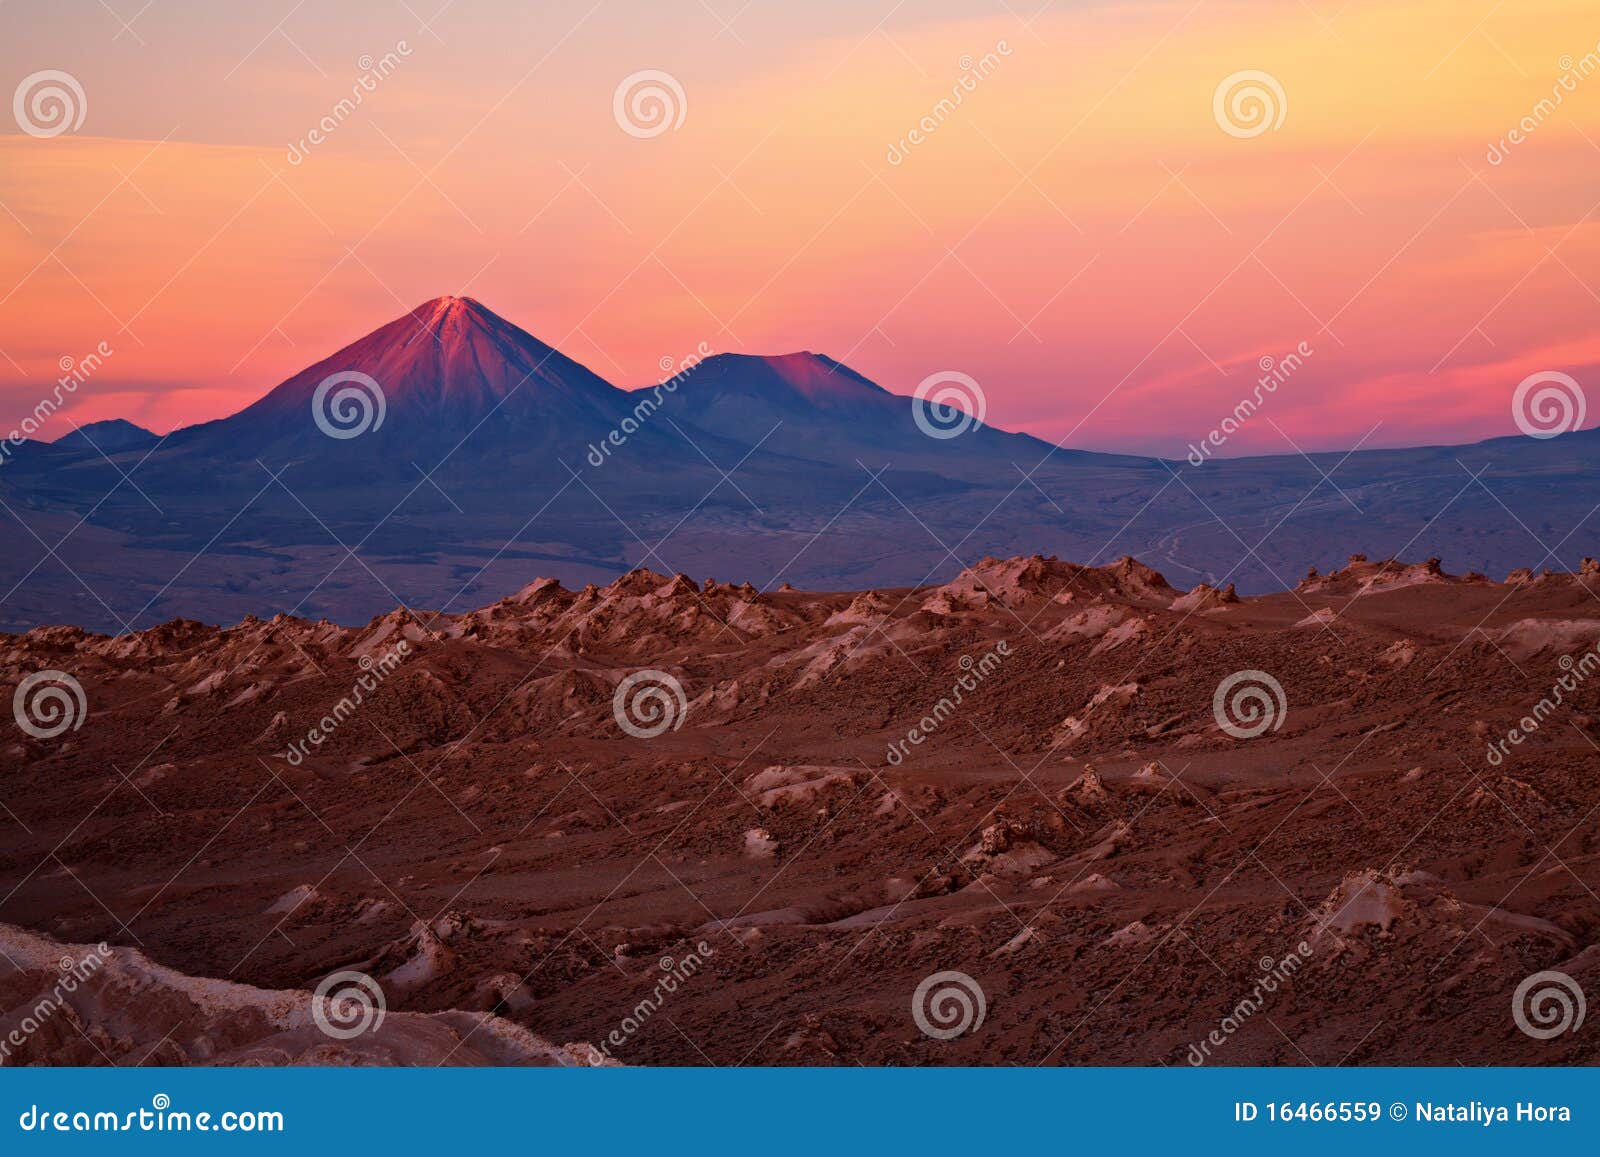 sunset over volcanoes and valle de la luna, chile